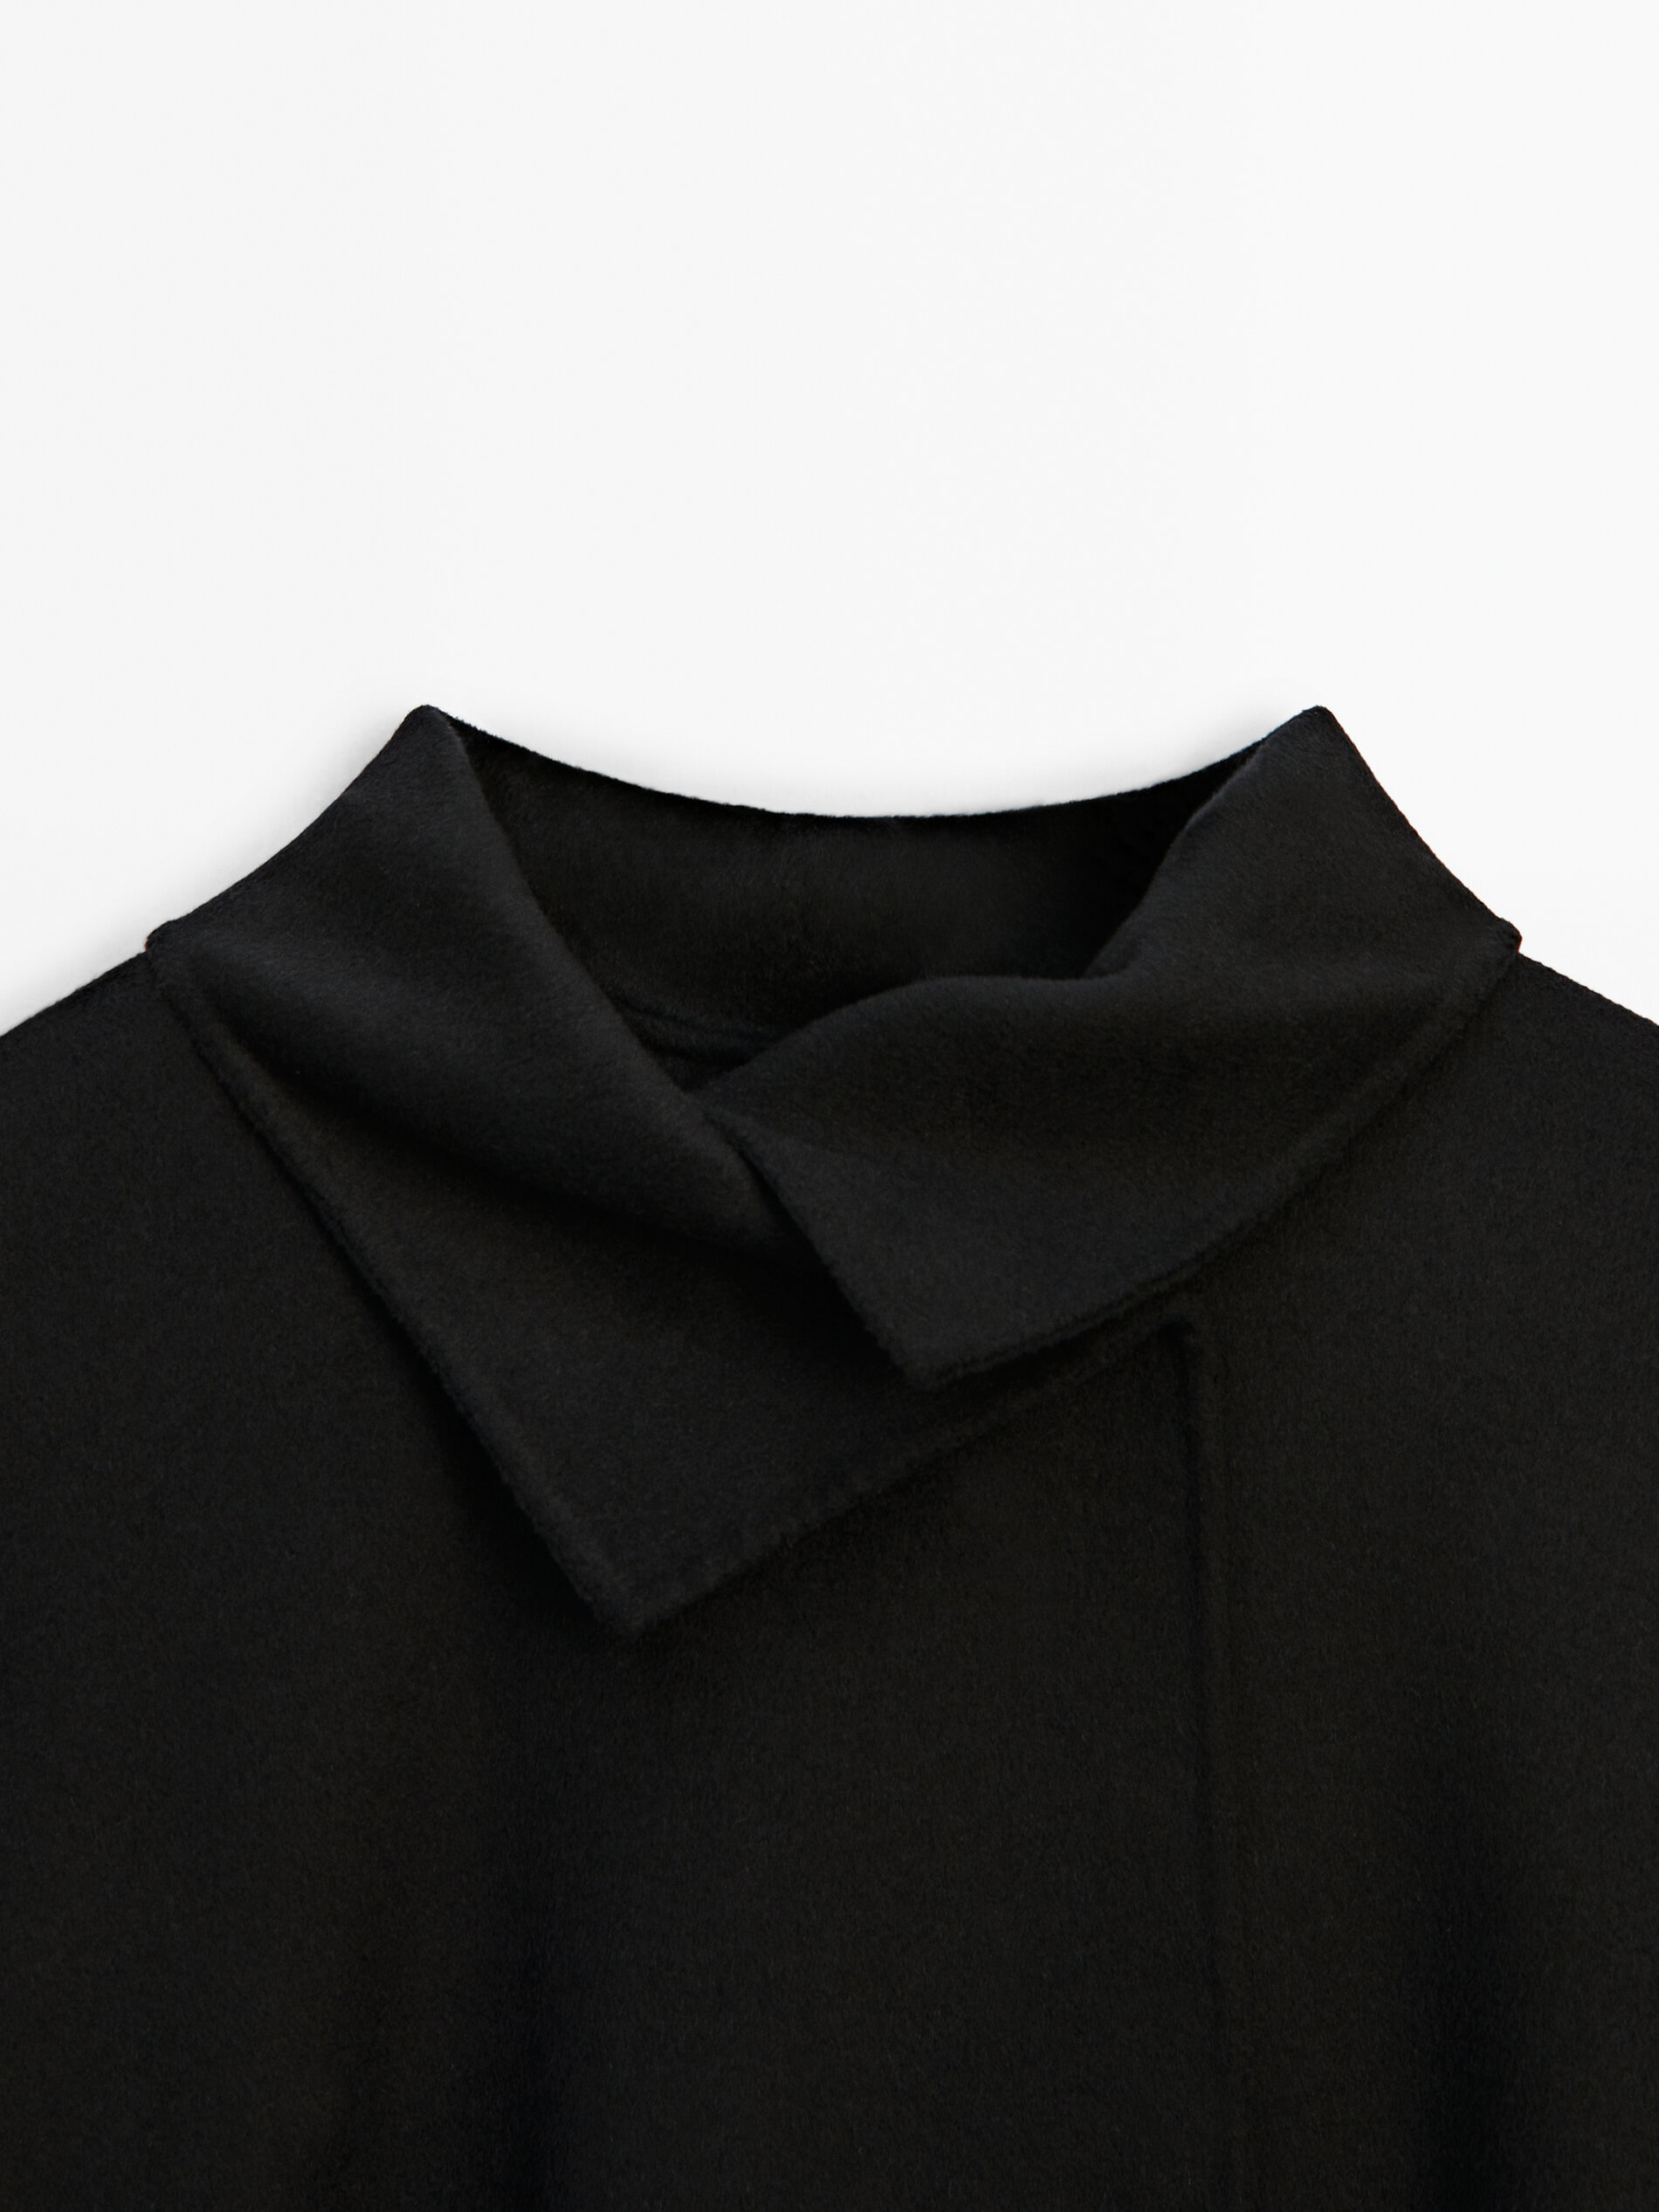 Abrigo capa negro mezcla lana